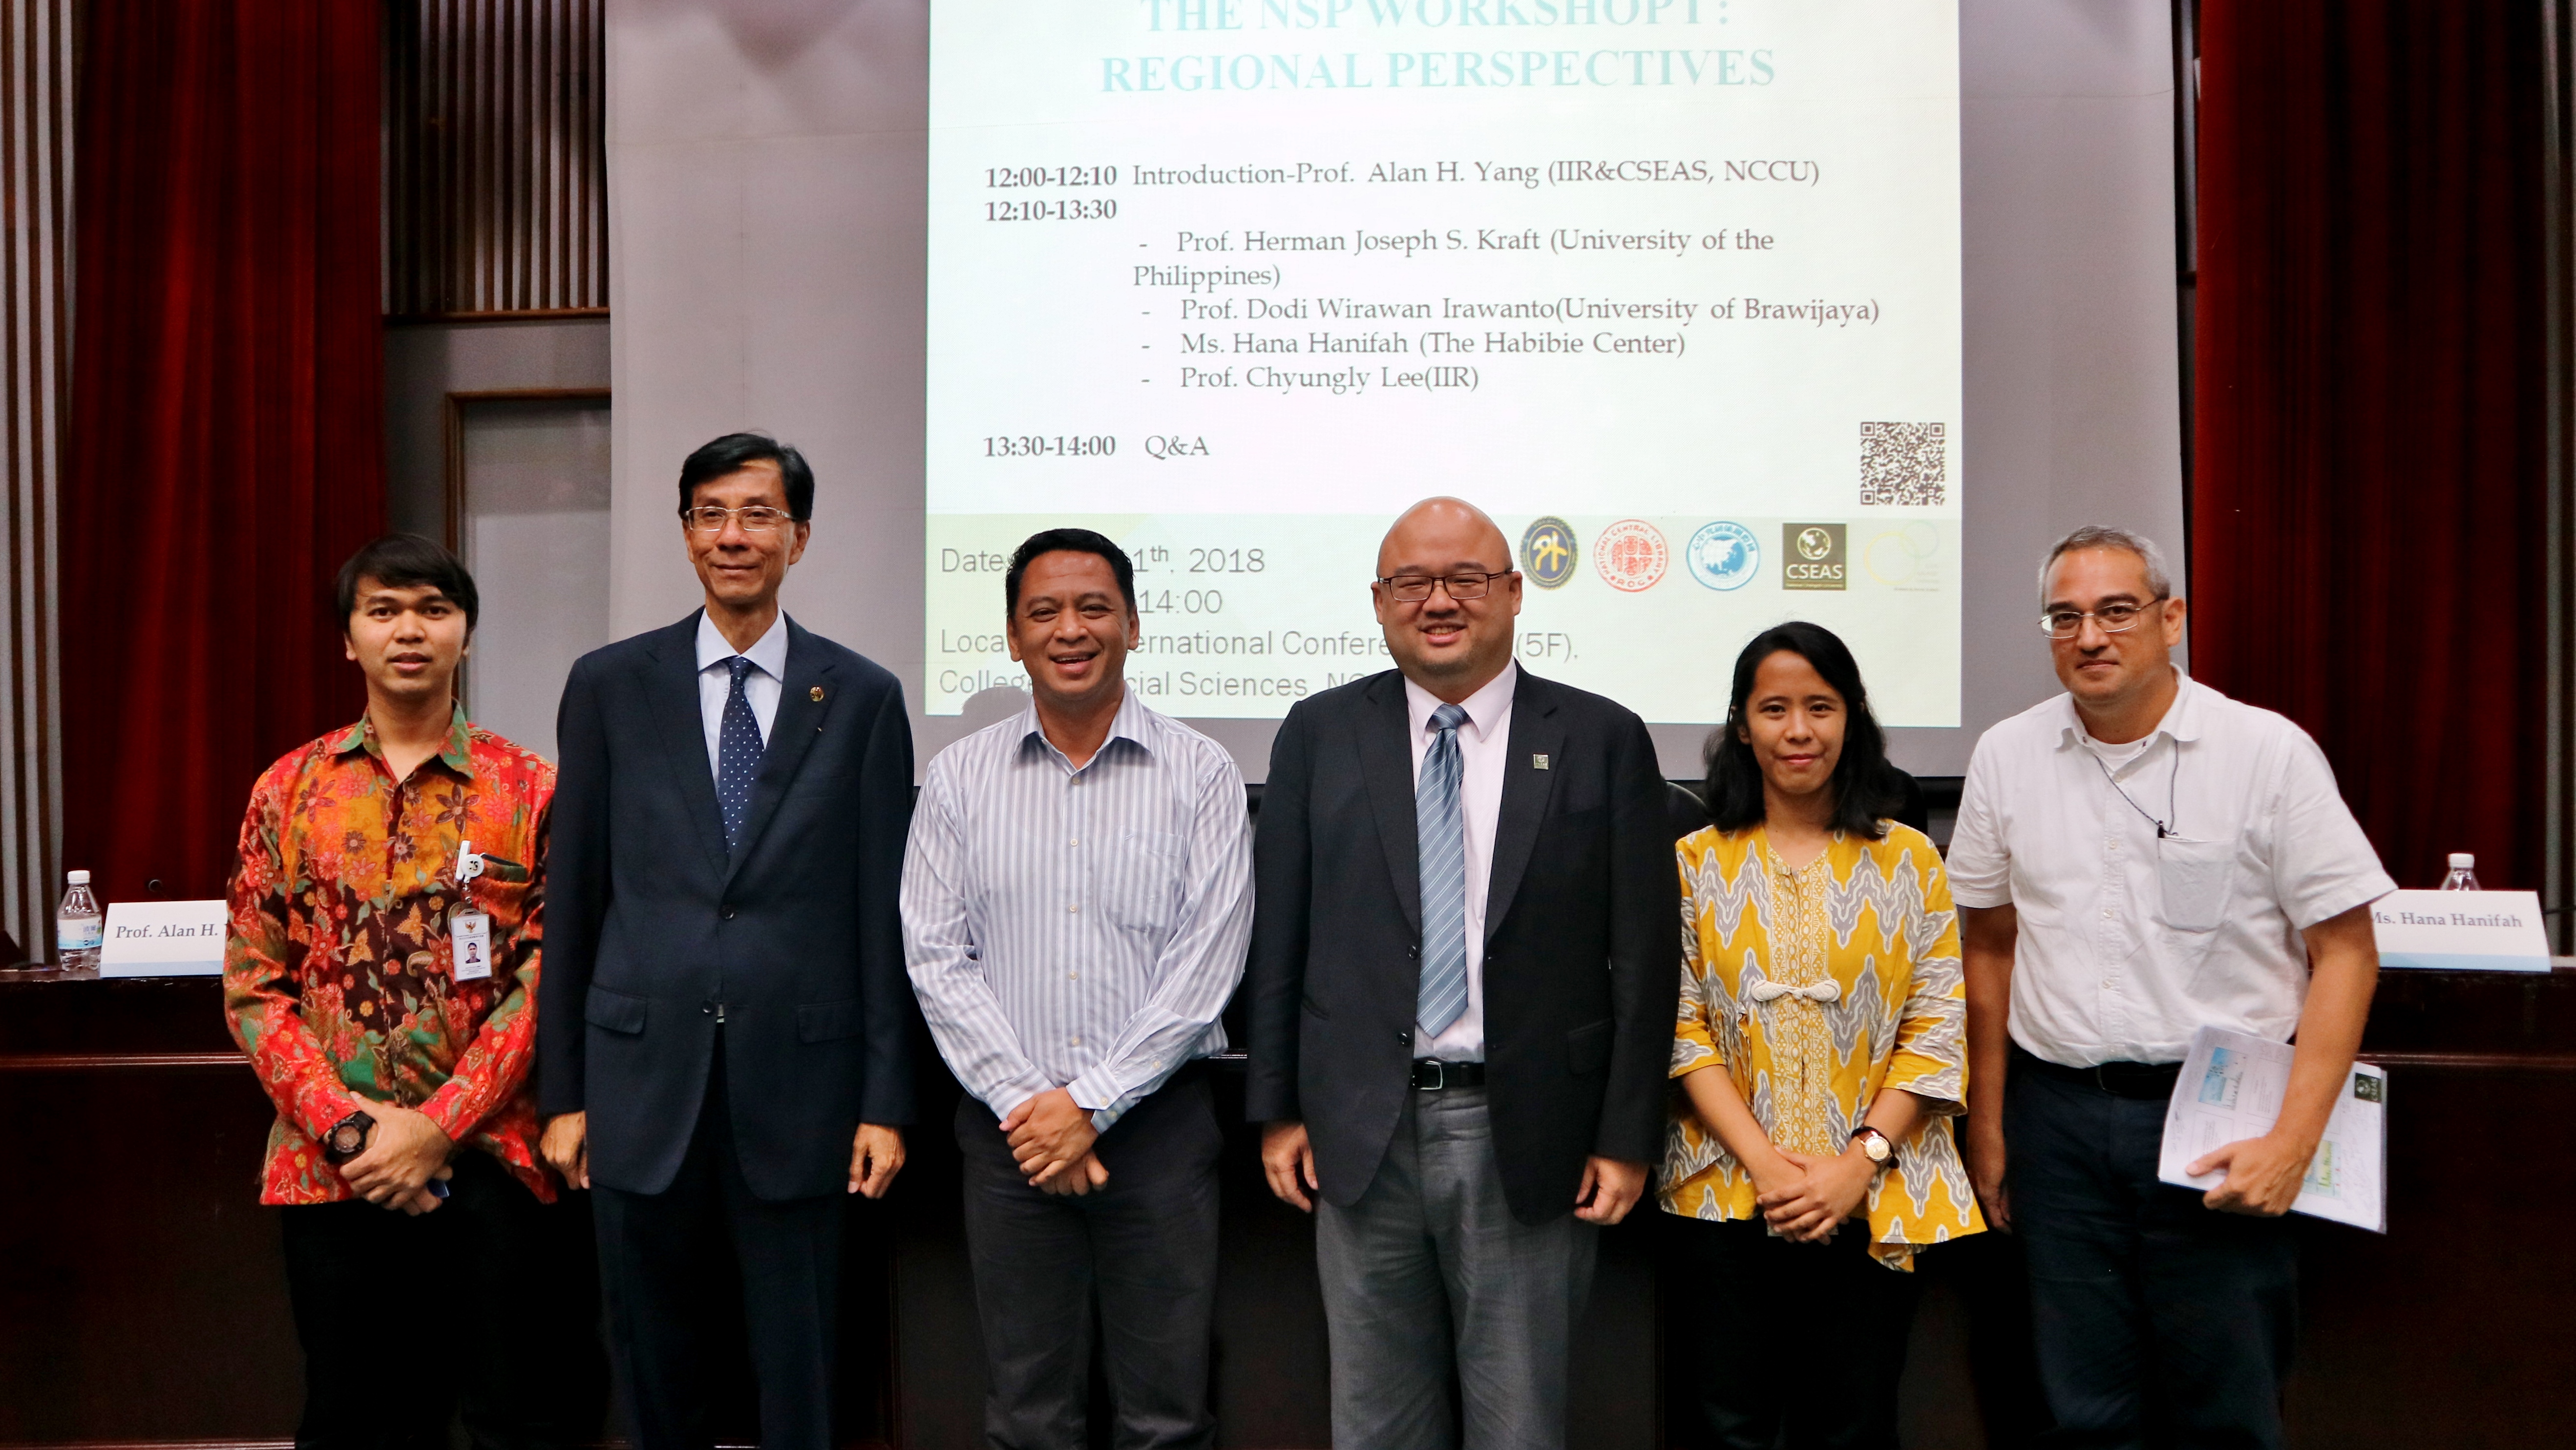 2018 2nd Presentations of MOFA Taiwan Fellowship Scholars - NSP Workshop (I) at NCCU:picture8